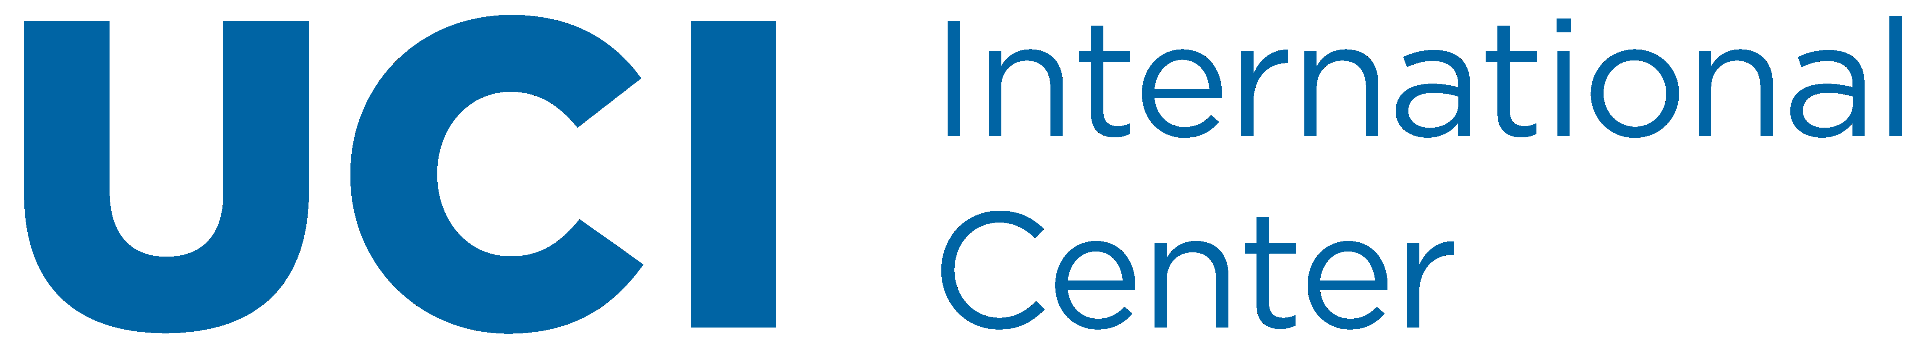 UCI International Center